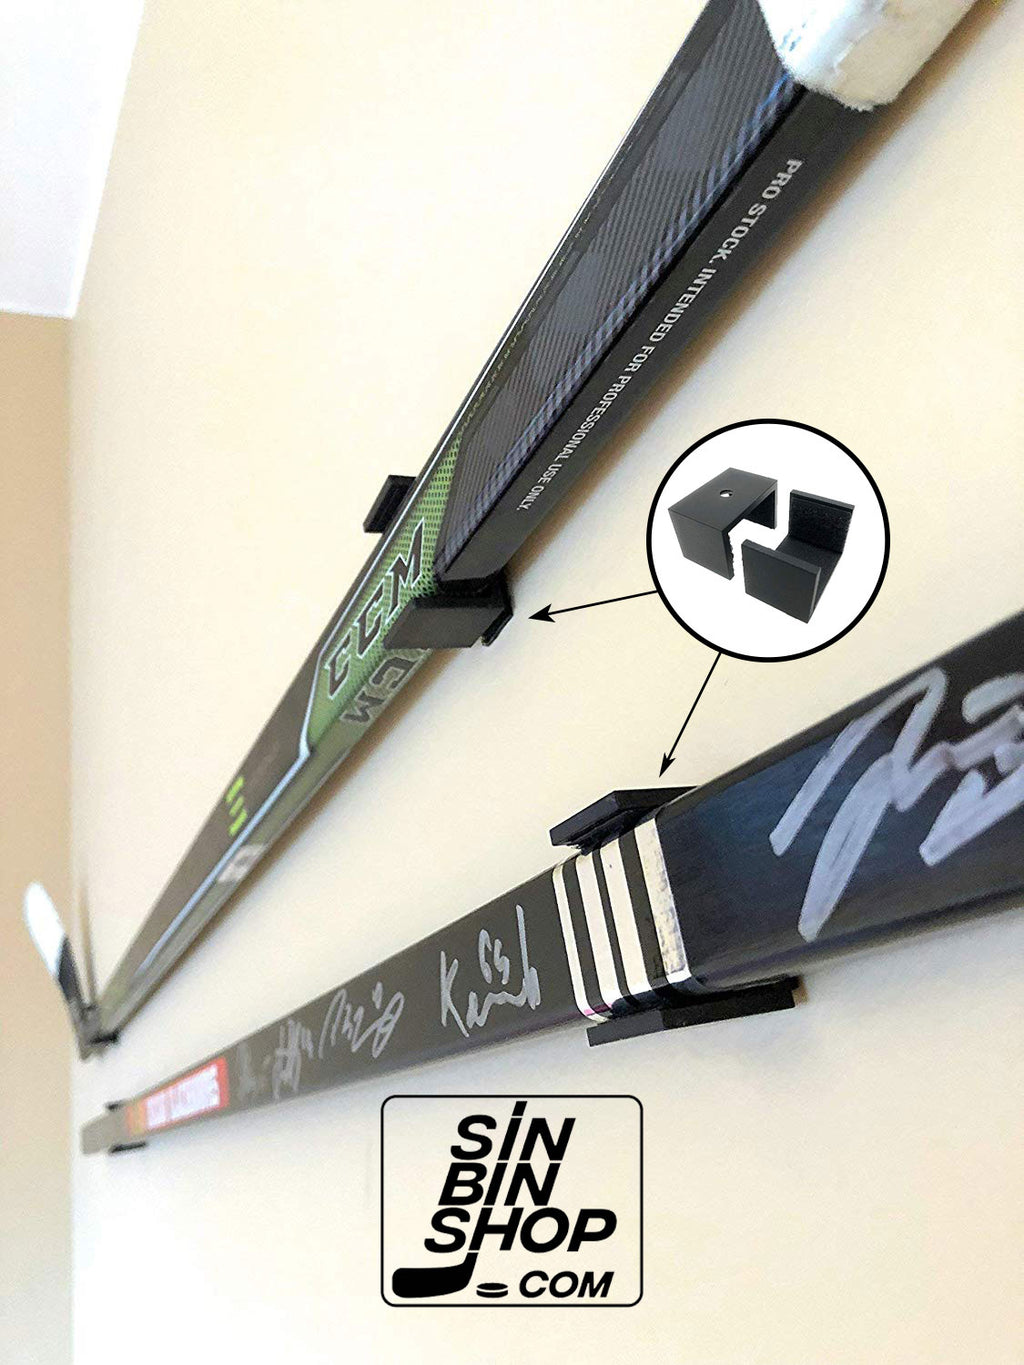 Hockey stick wall display bracket